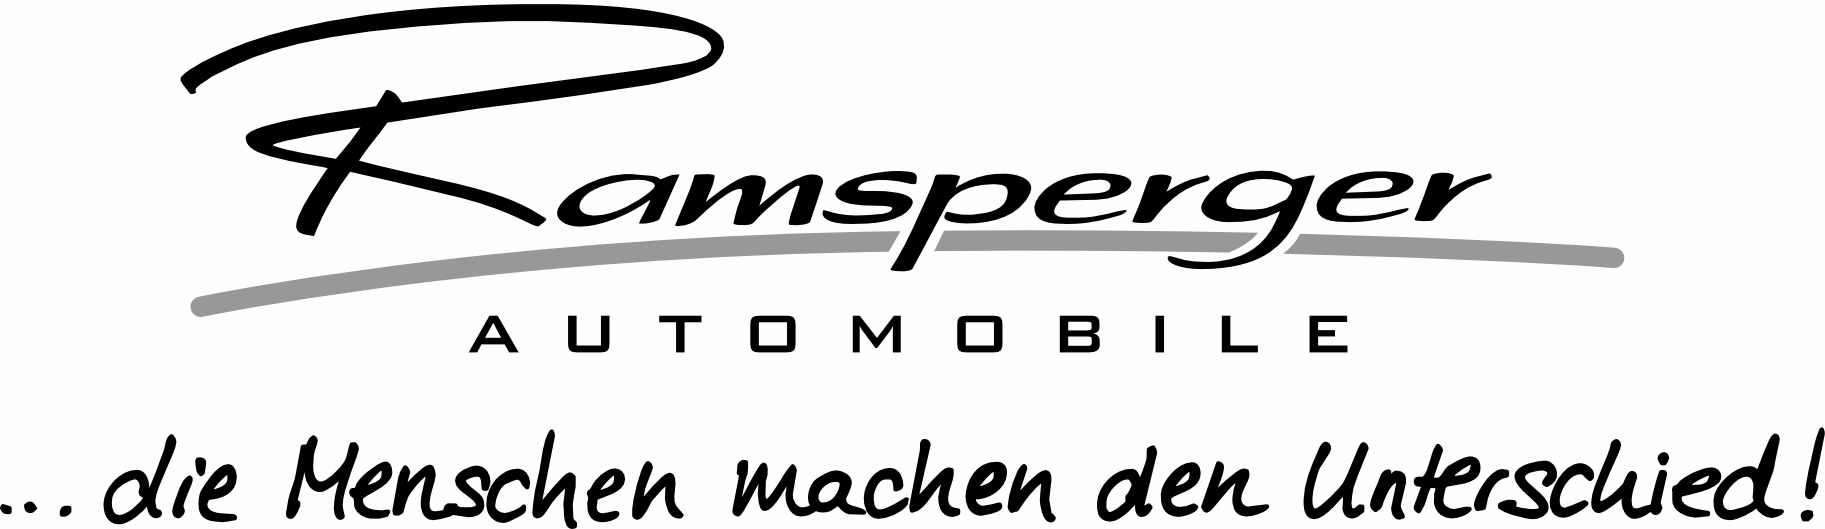 Ramsperger Logo Claim.jpg